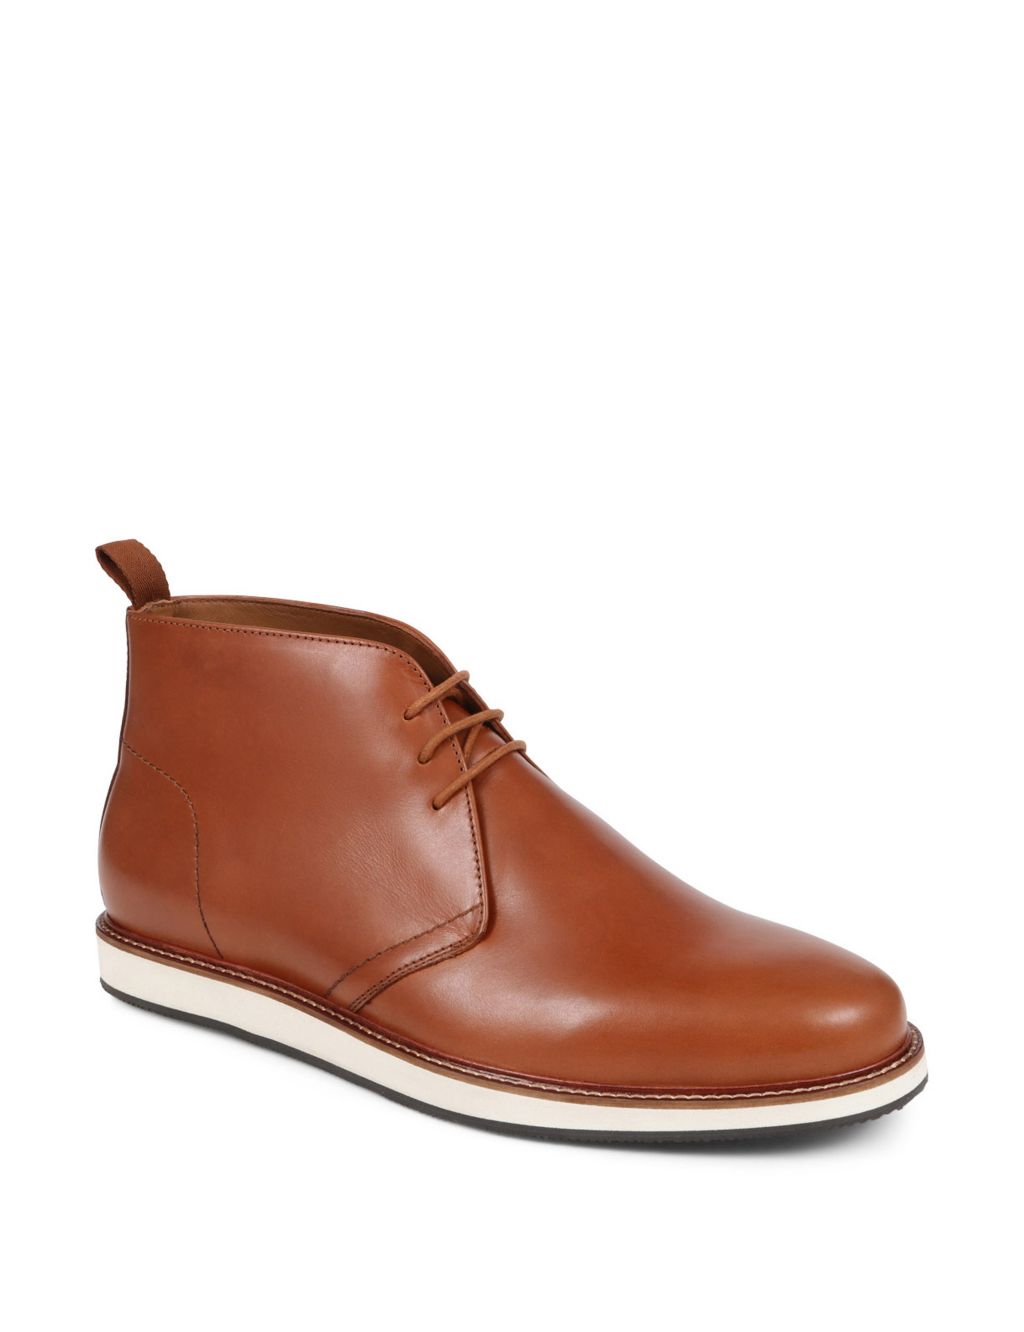 Leather Chukka Boots image 2